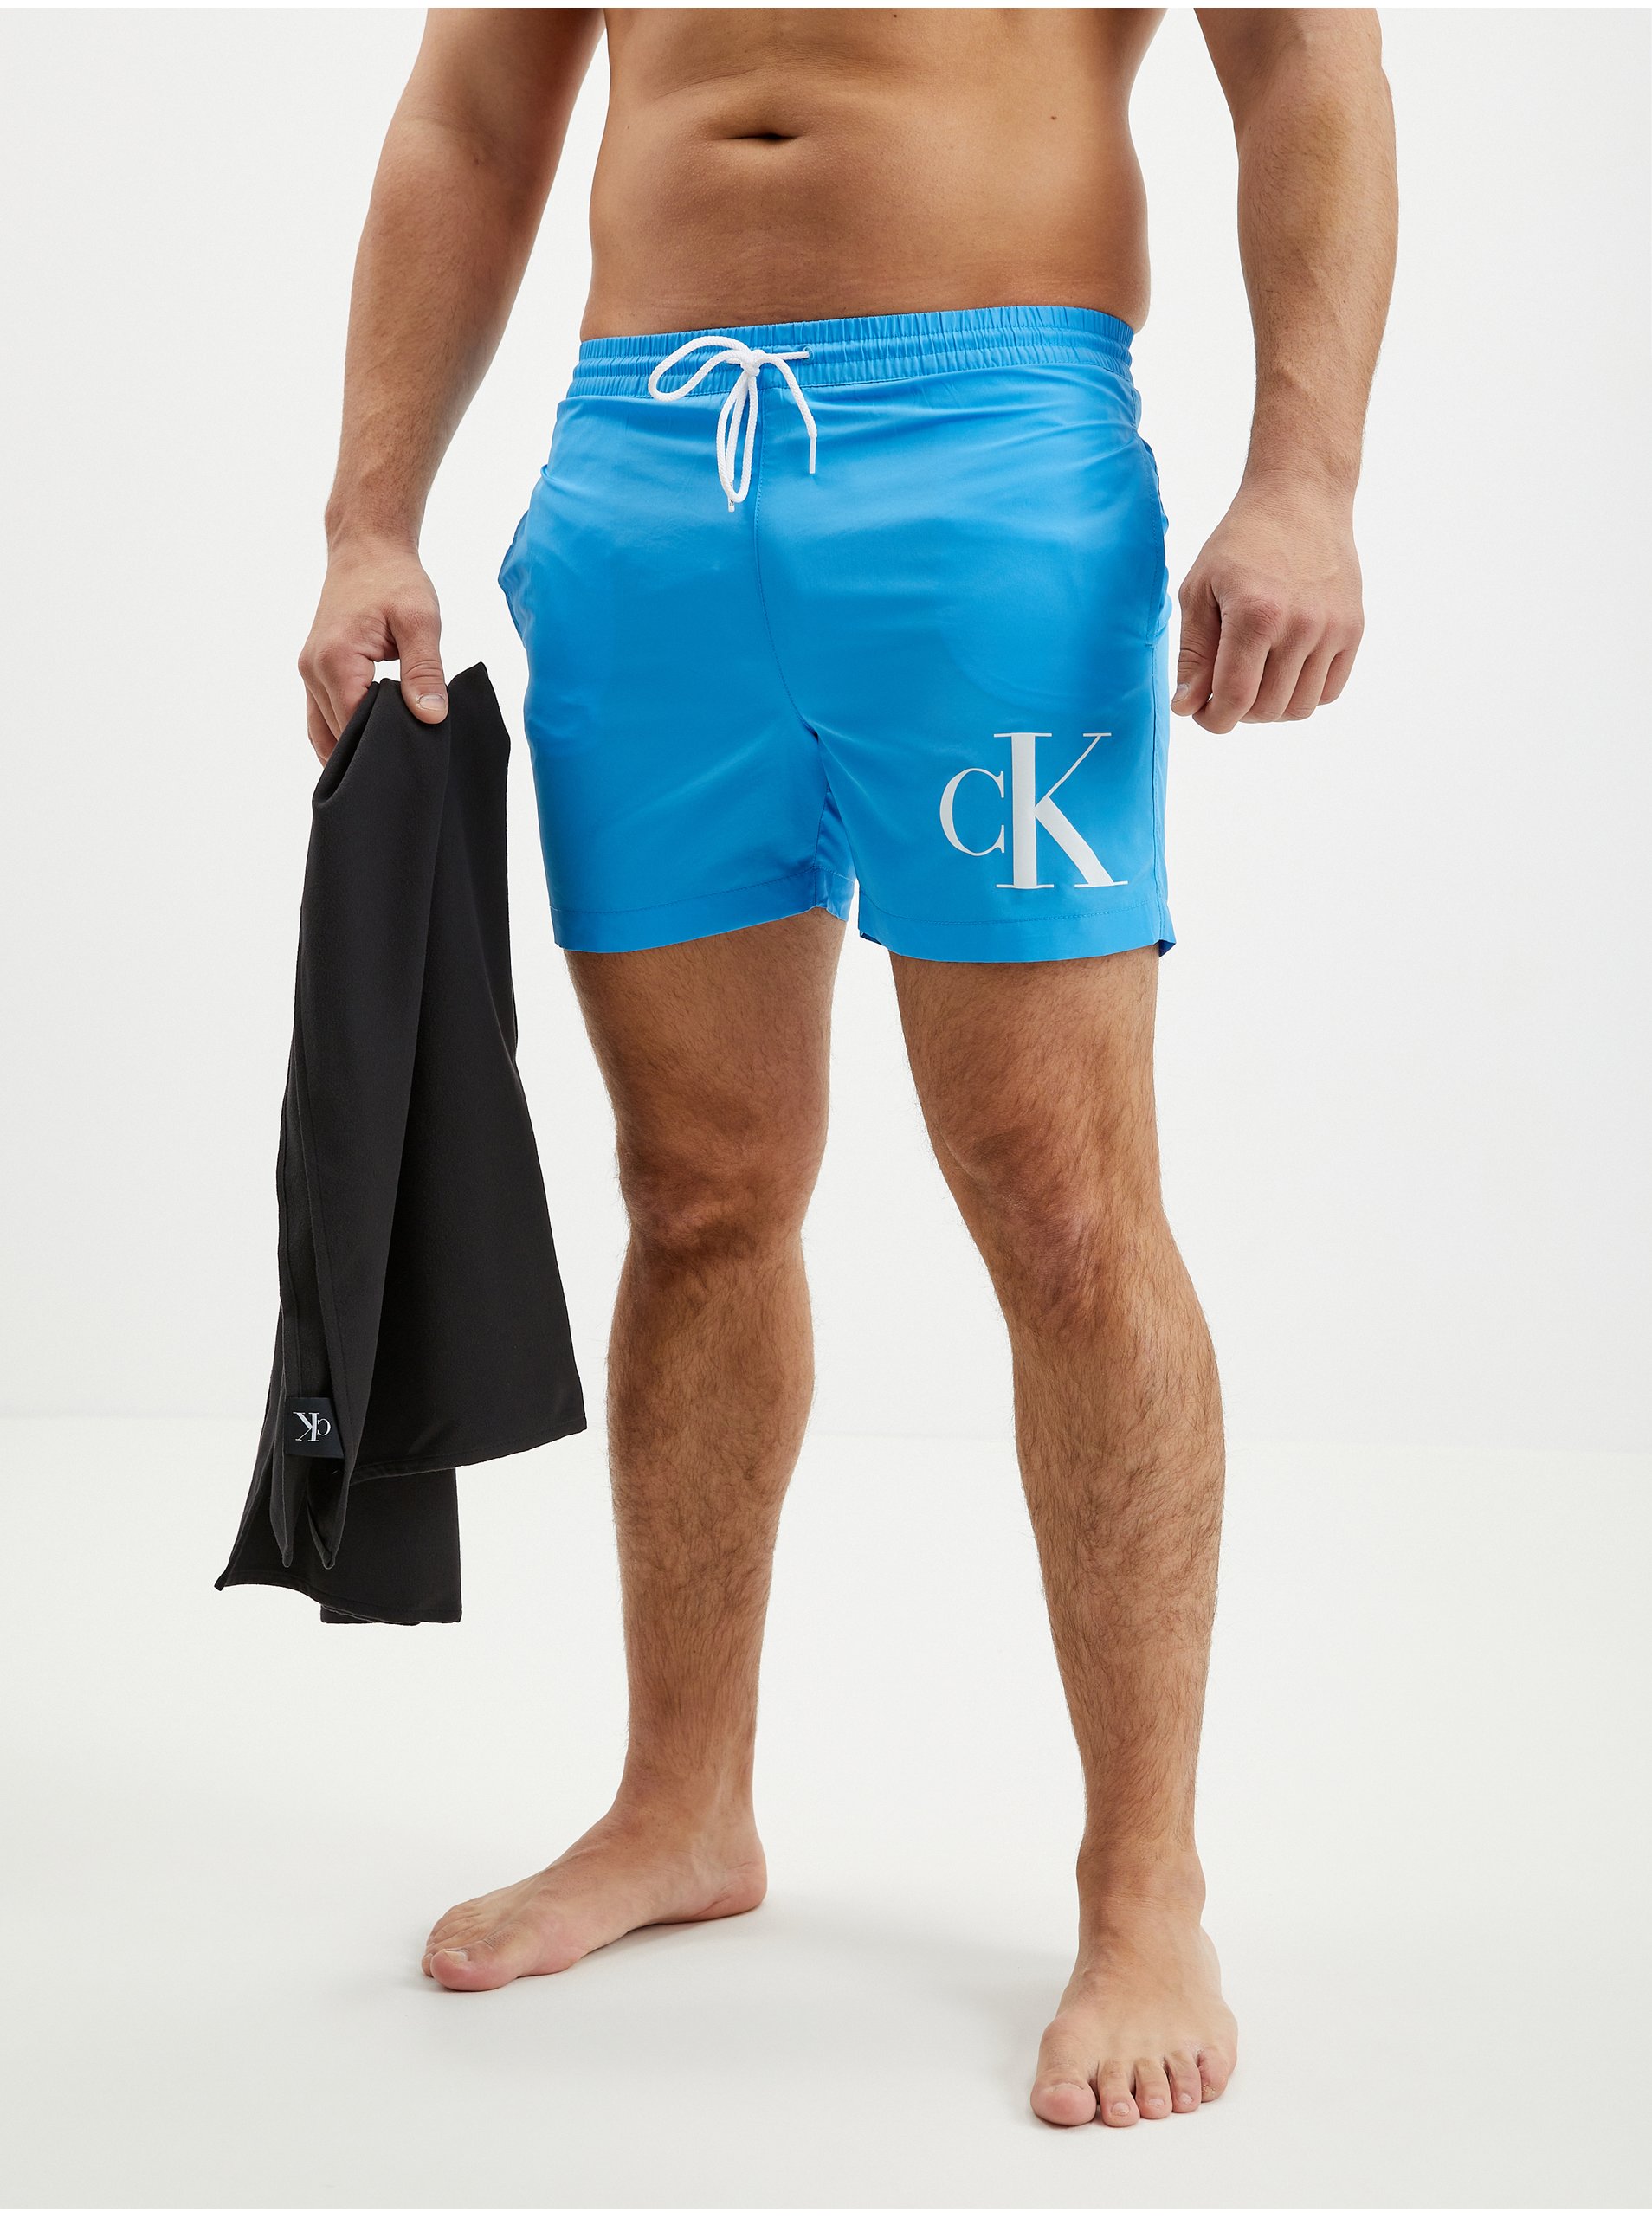 Men's swimsuit set in blue color and towel Calvin Klein Underwear - Men's